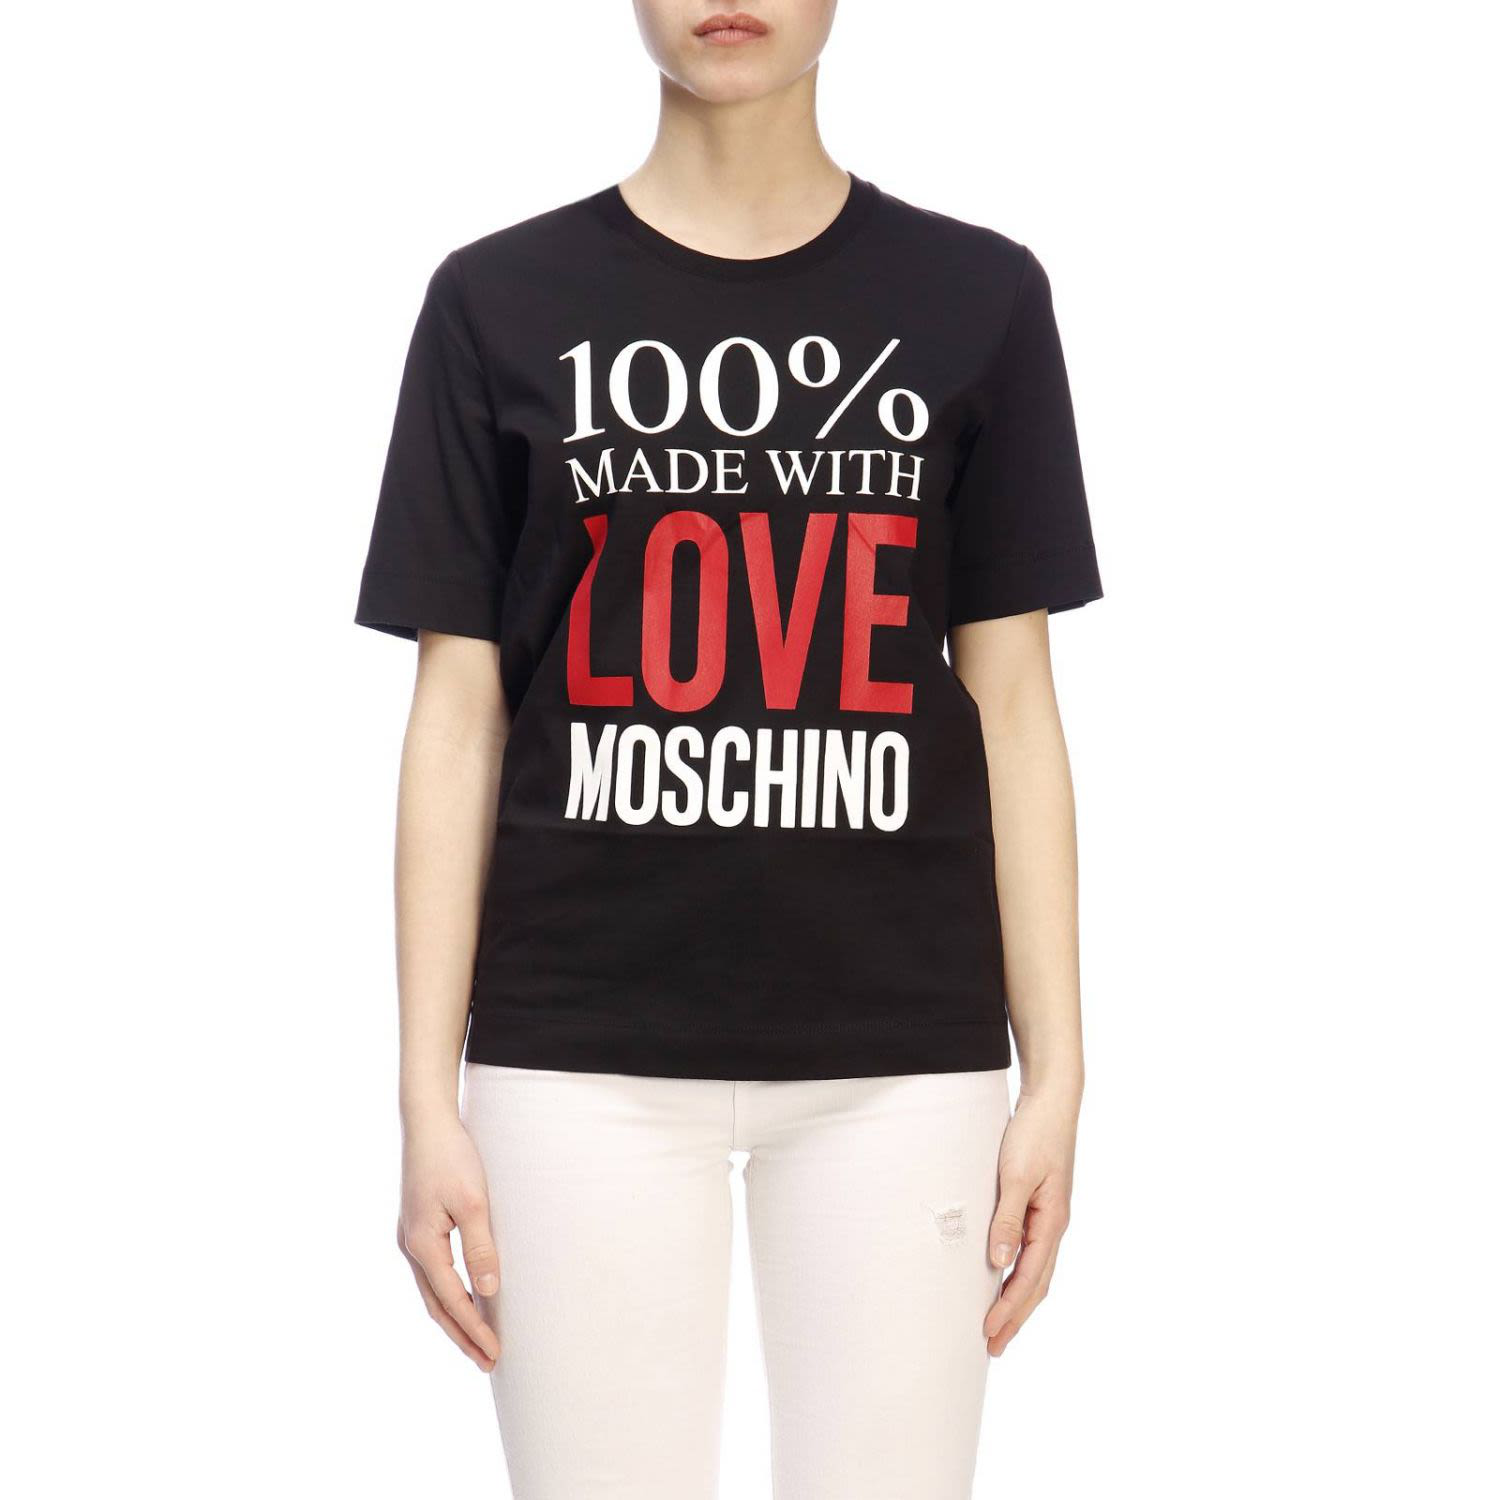 love moschino tshirt sale